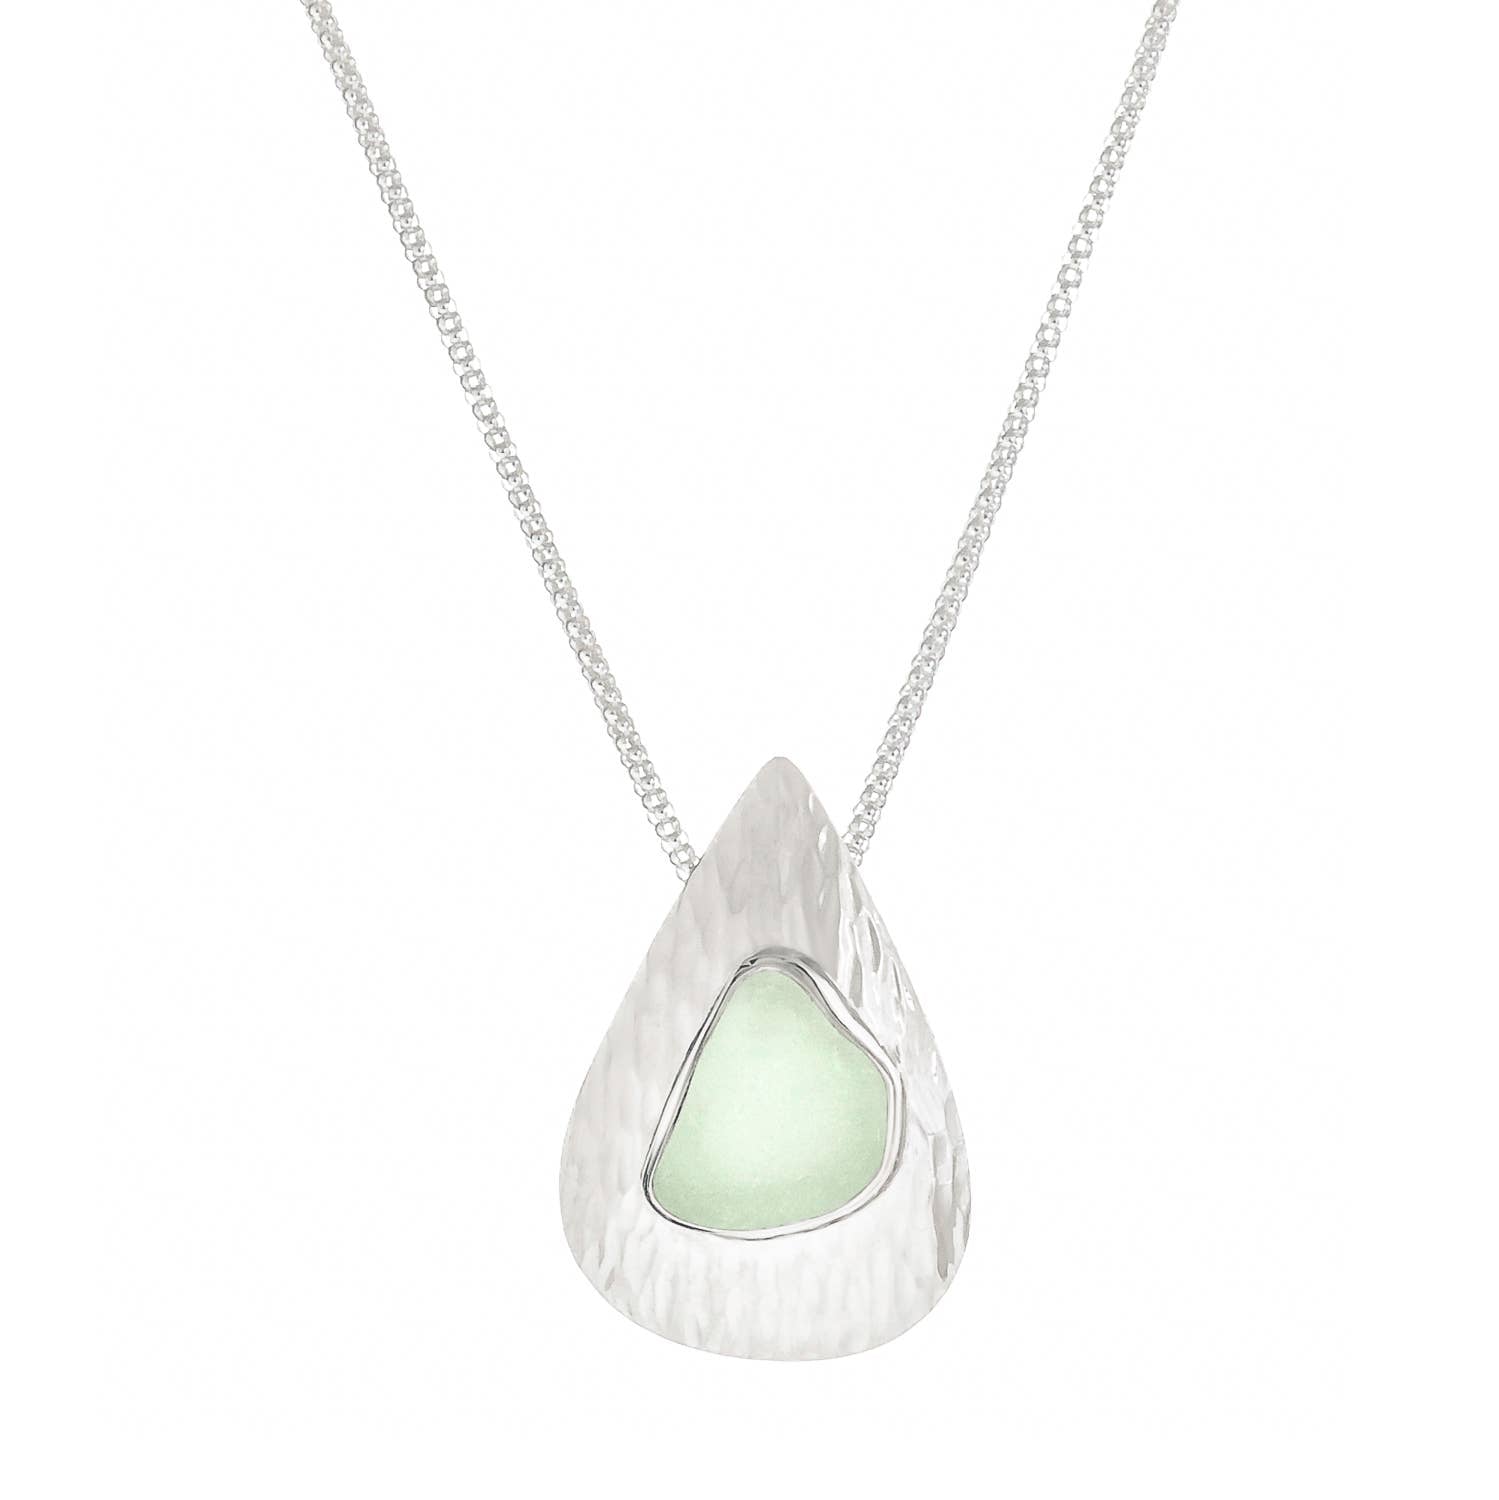 sea glass pendant necklace